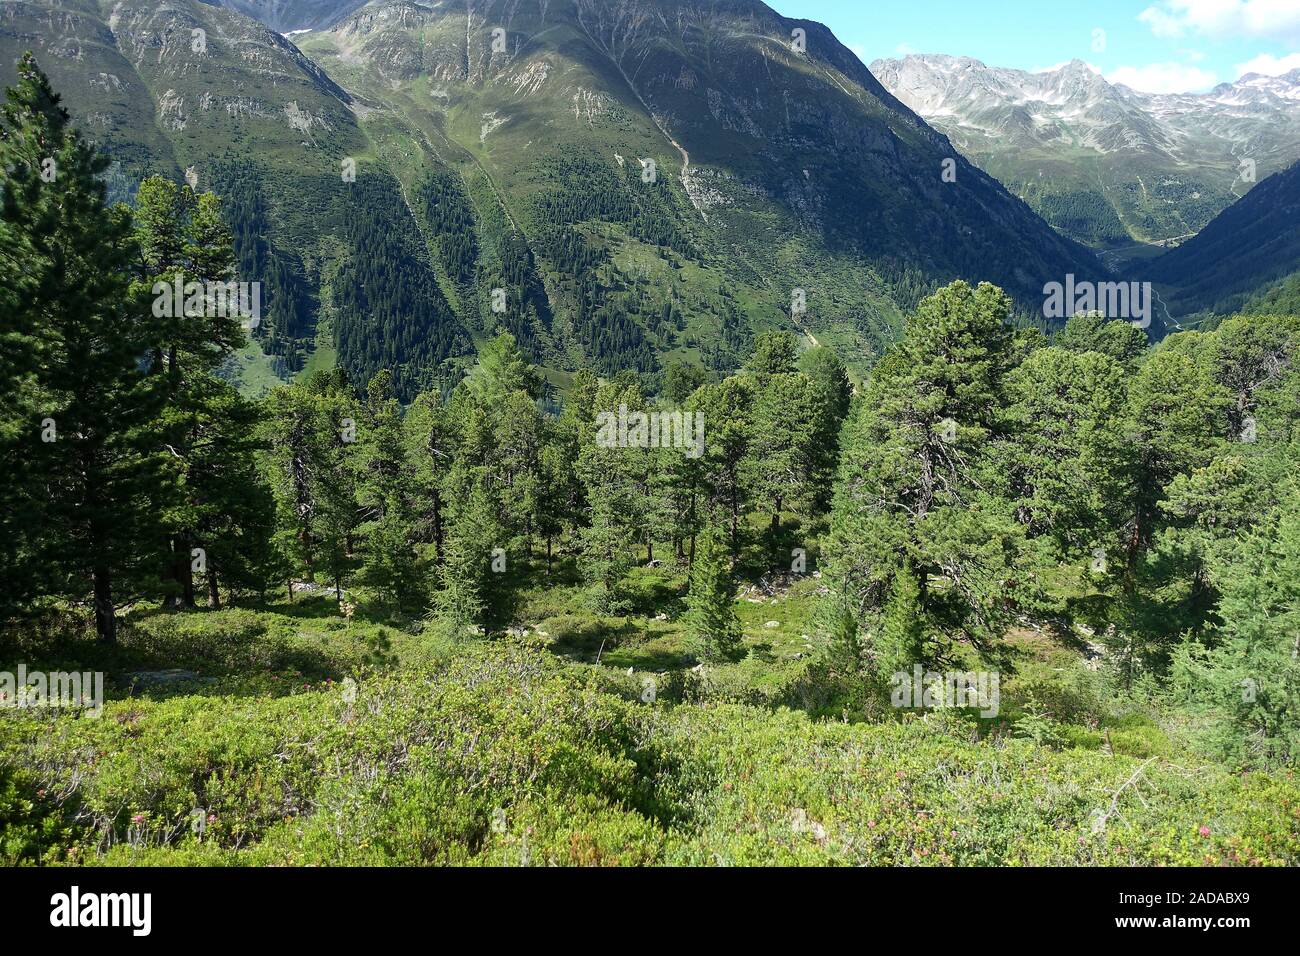 Swiss stone pine forest at the forest line, Niederthai, Ötztal, Austria Stock Photo